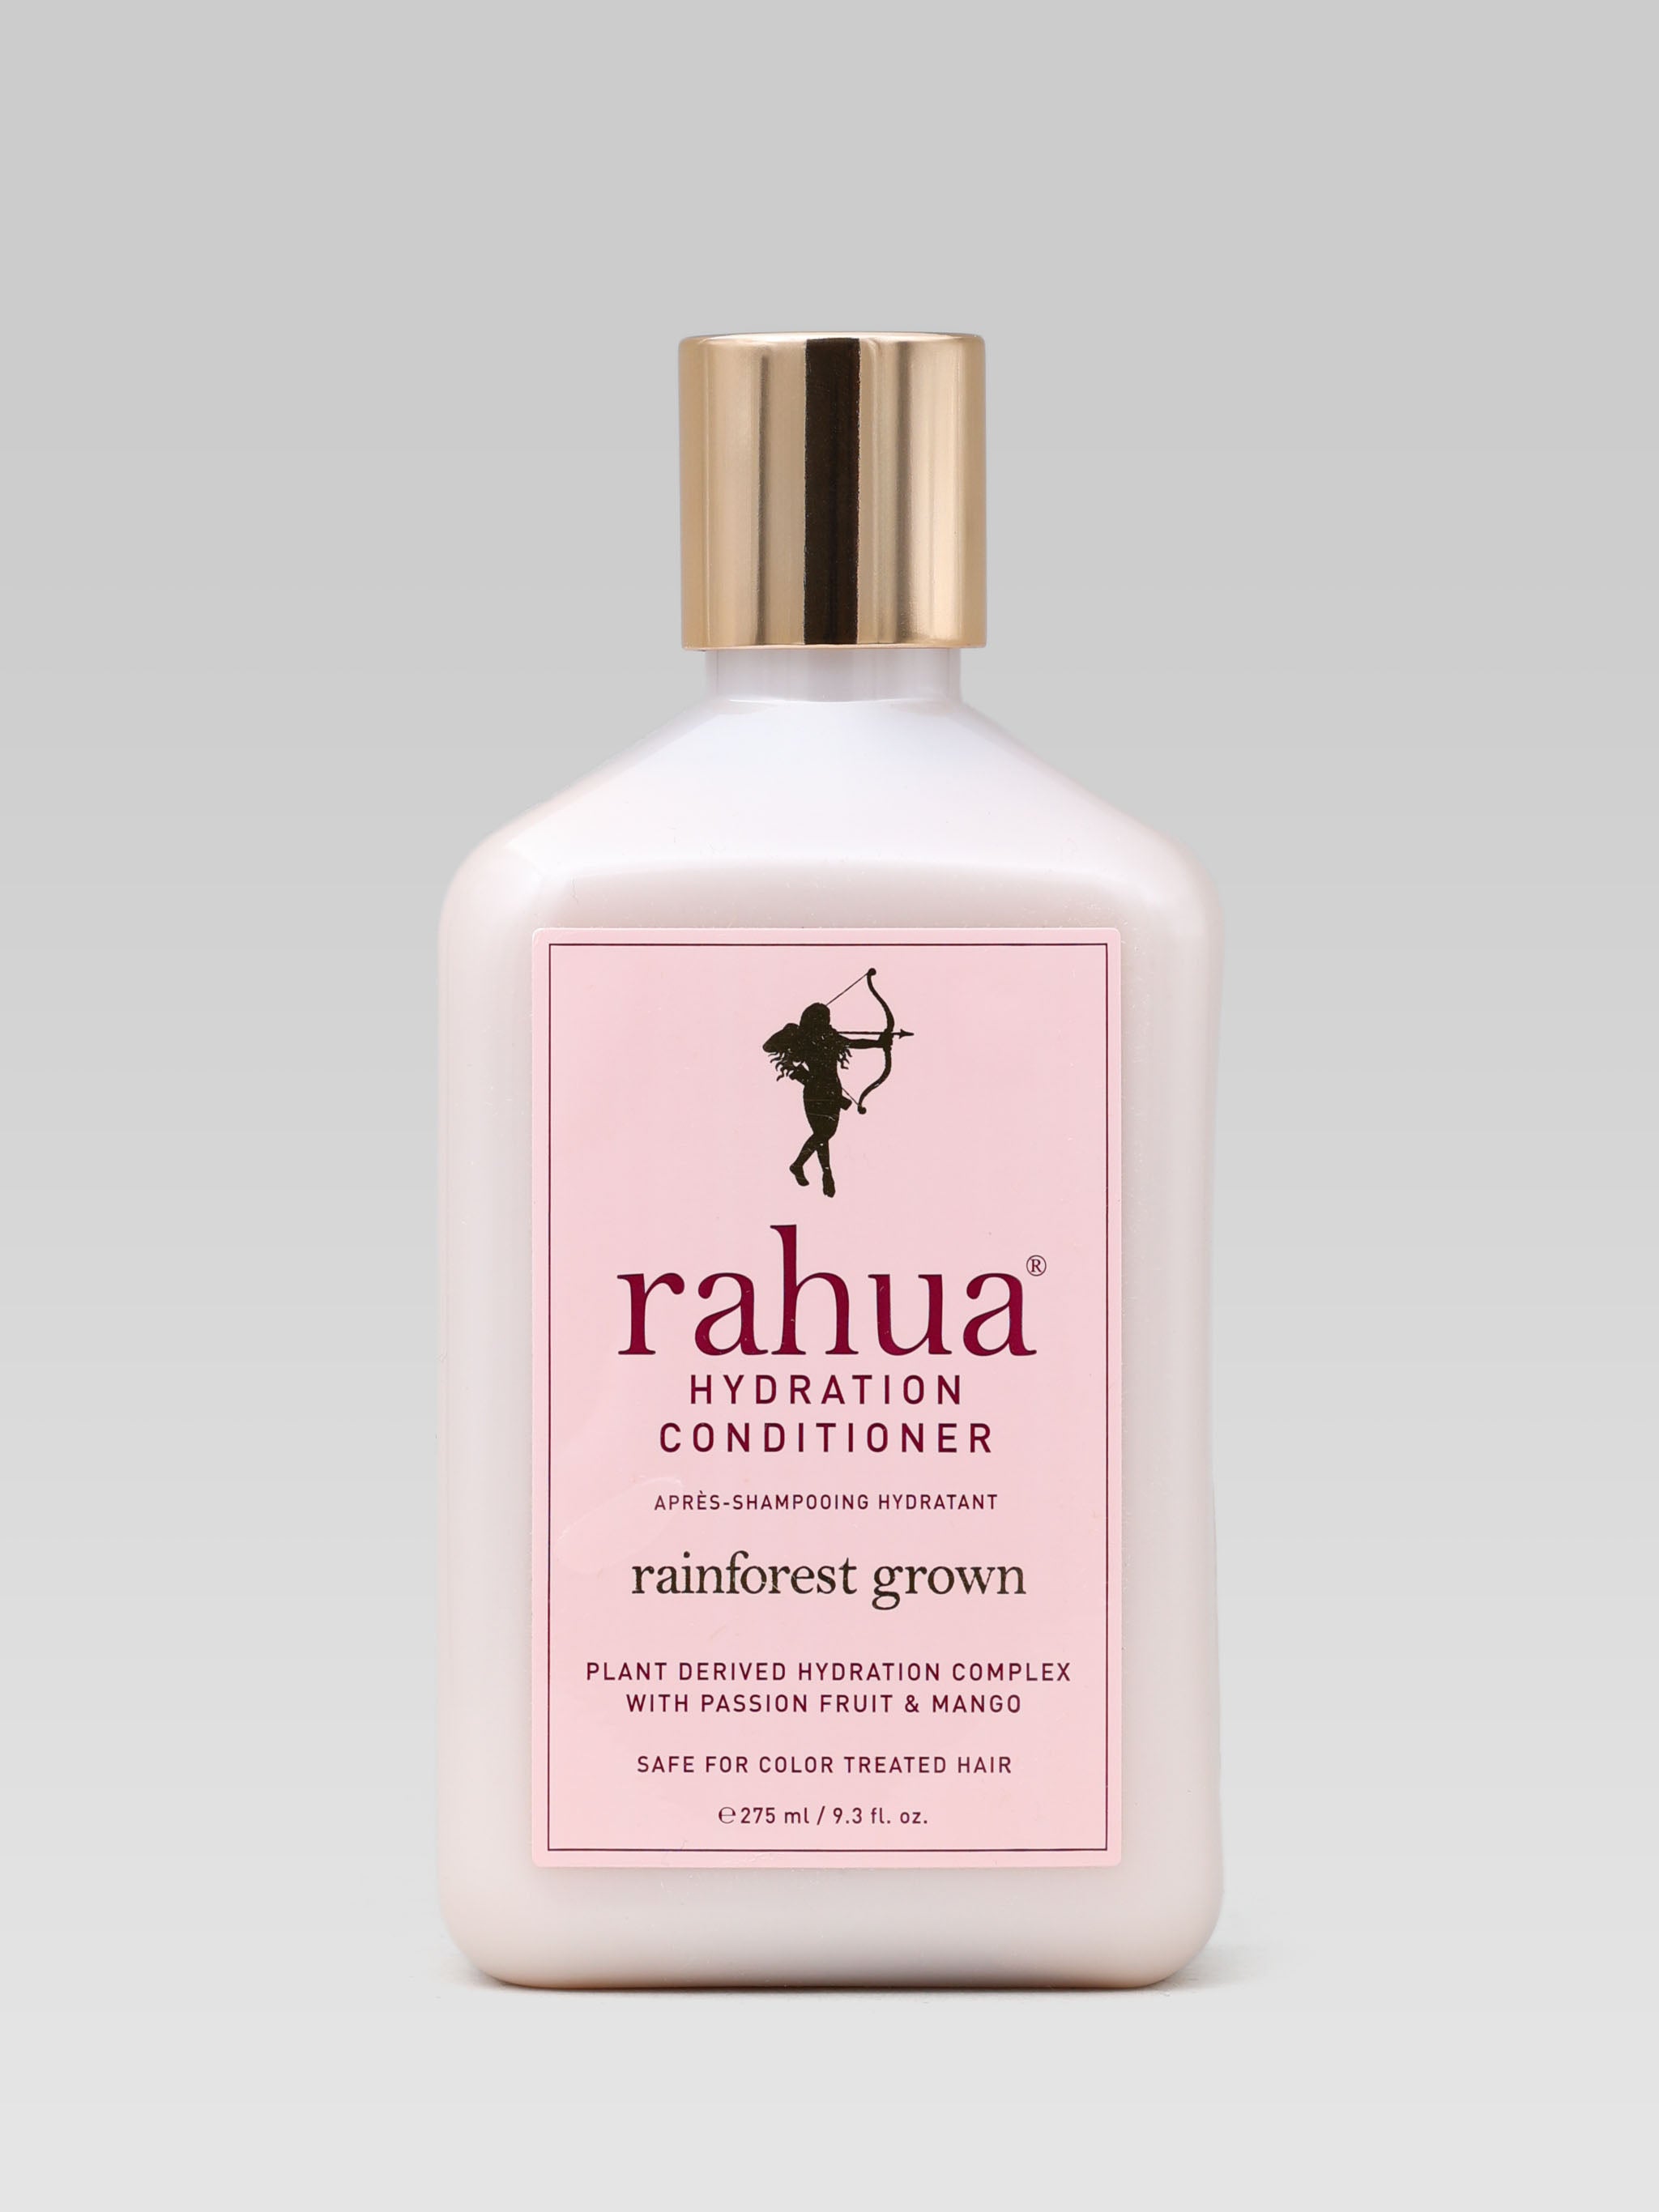 Rahua Hydration Conditioner Rainforest Grown